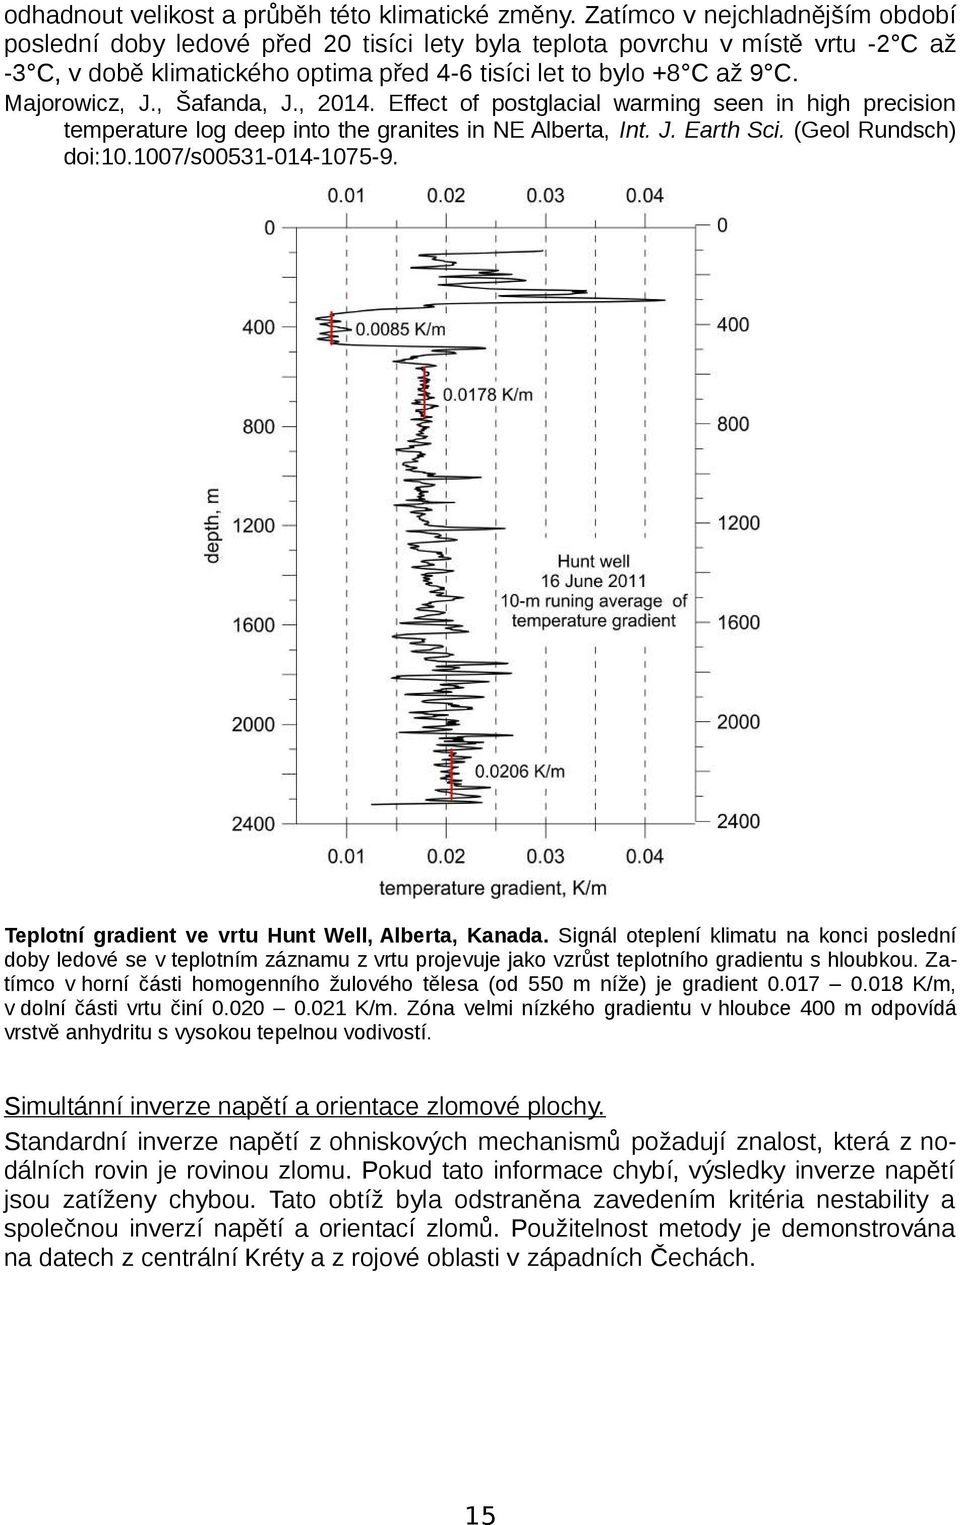 Majorowicz, J., Šafanda, J., 2014. Effect of postglacial warming seen in high precision temperature log deep into the granites in NE Alberta, Int. J. Earth Sci. (Geol Rundsch) doi:10.